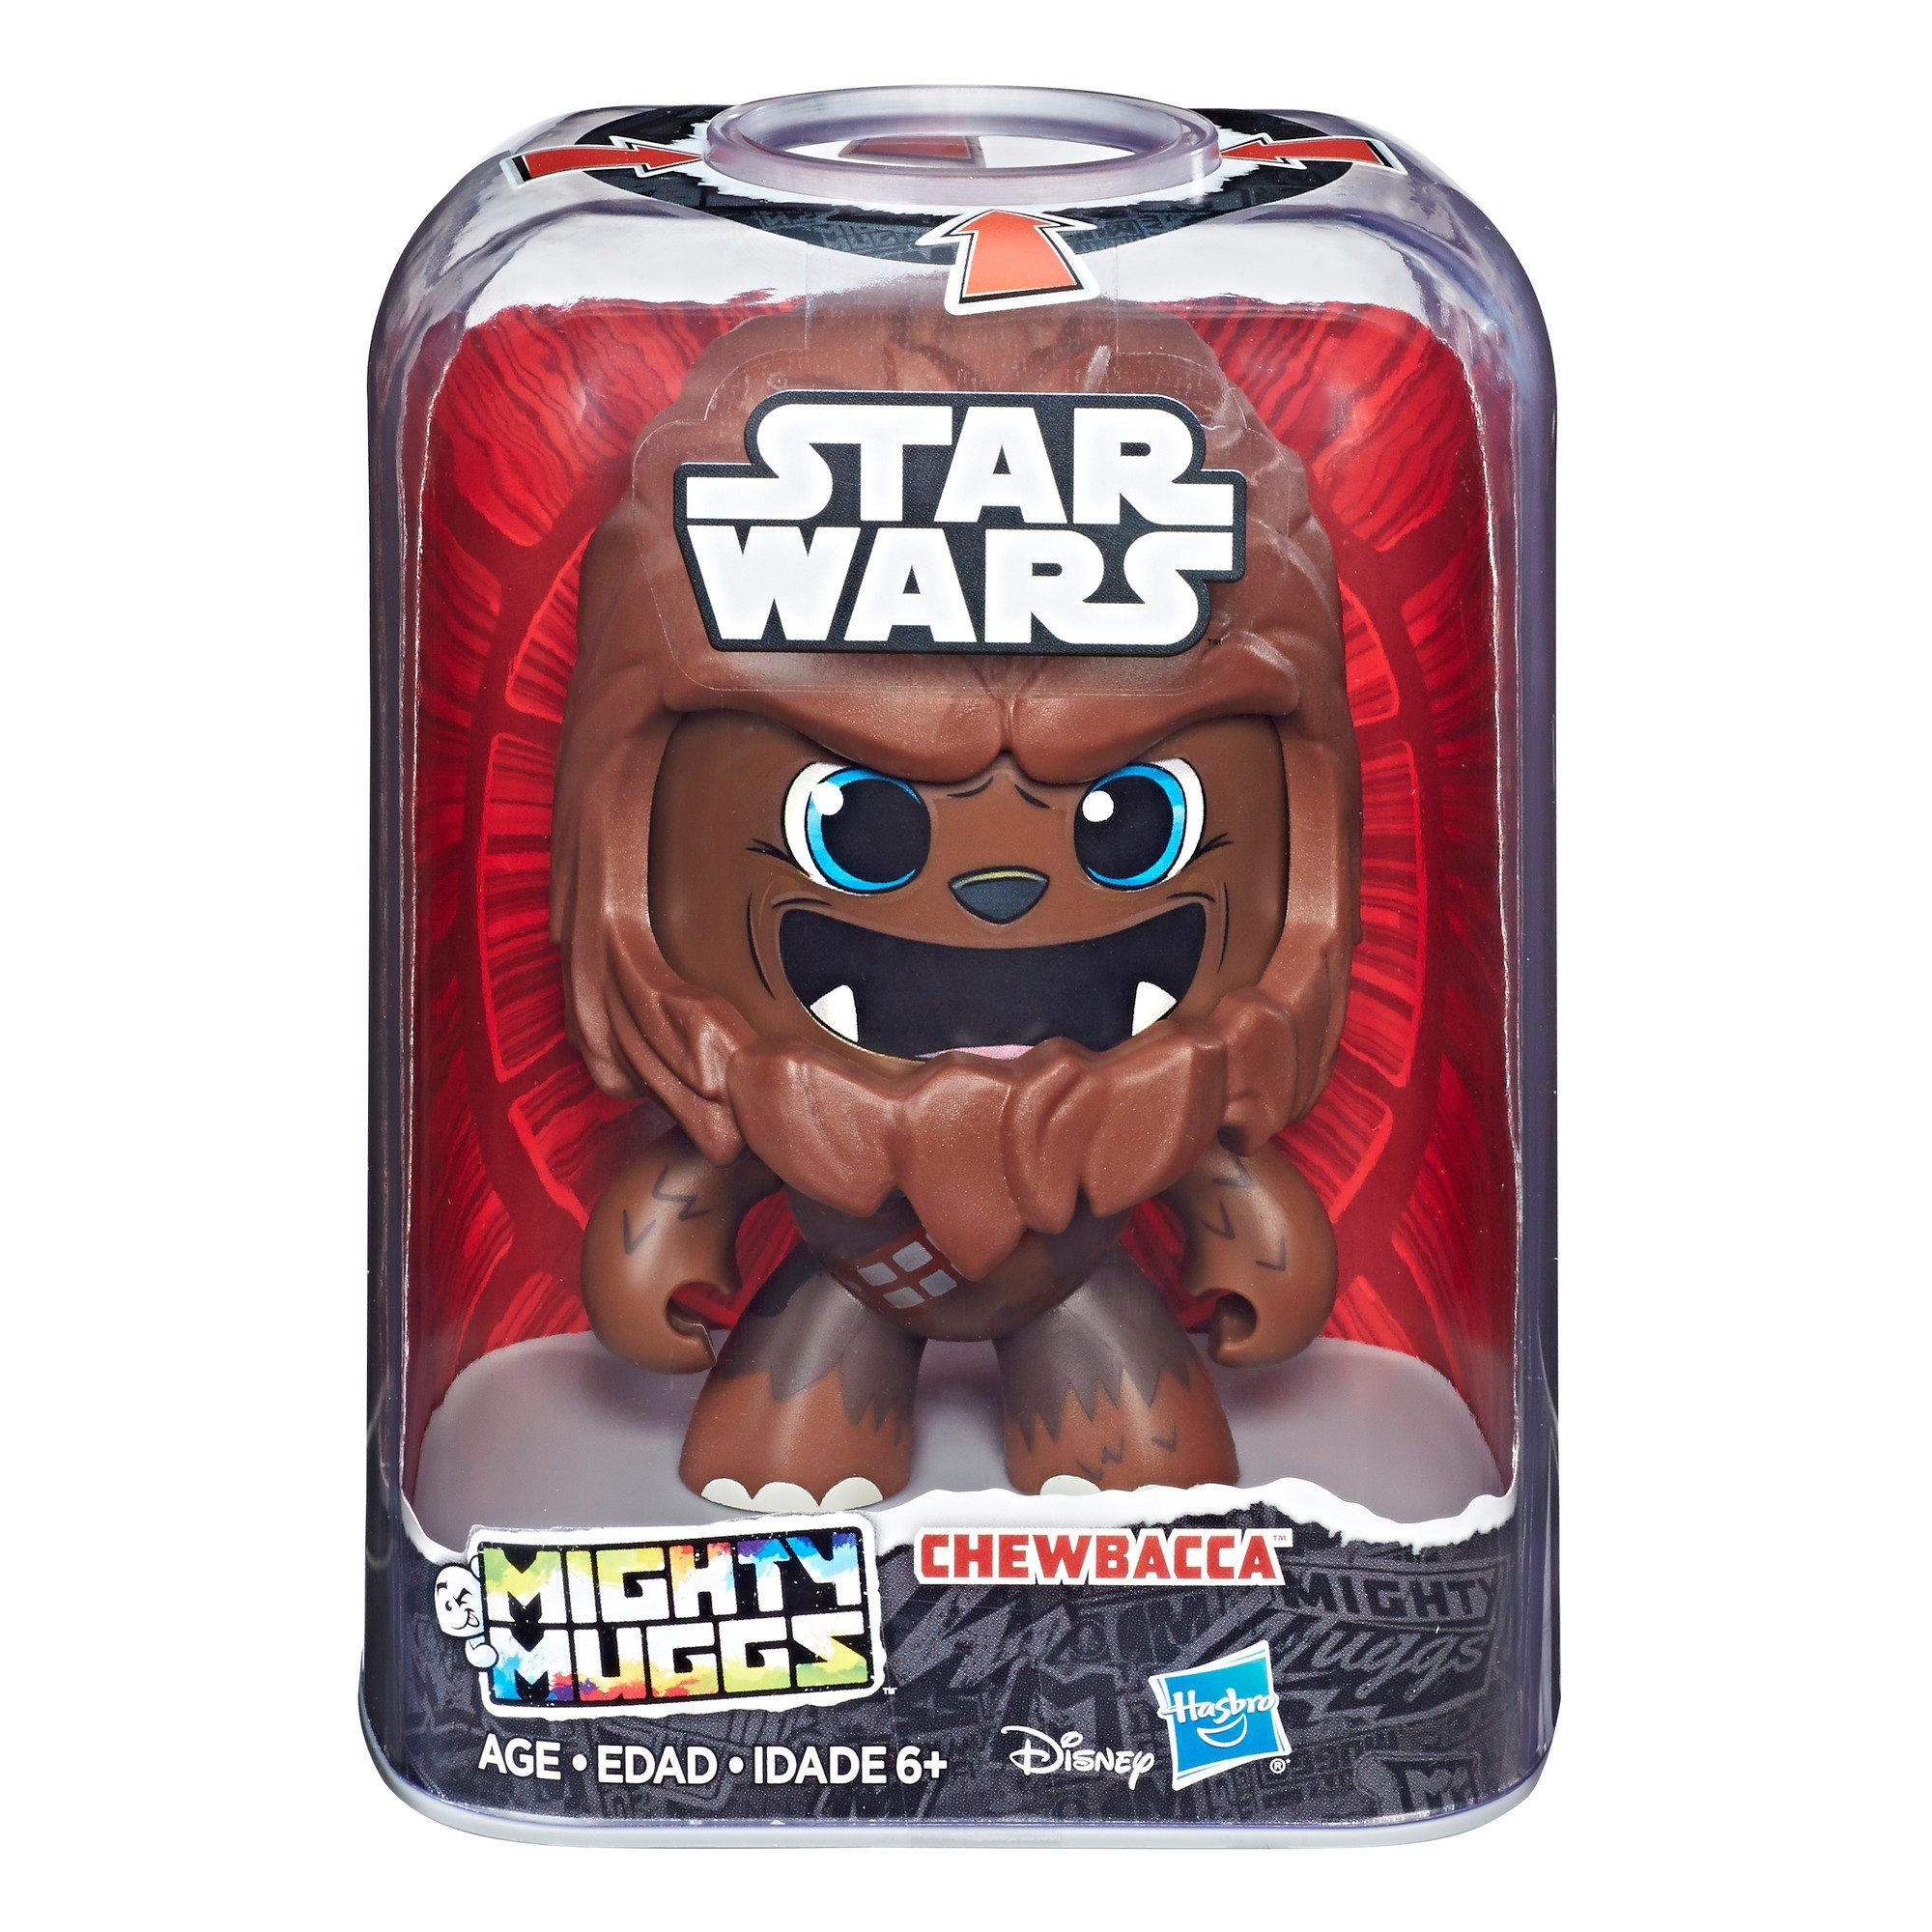 Hasbro Star Wars Mighty Muggs Chewbacca Figure